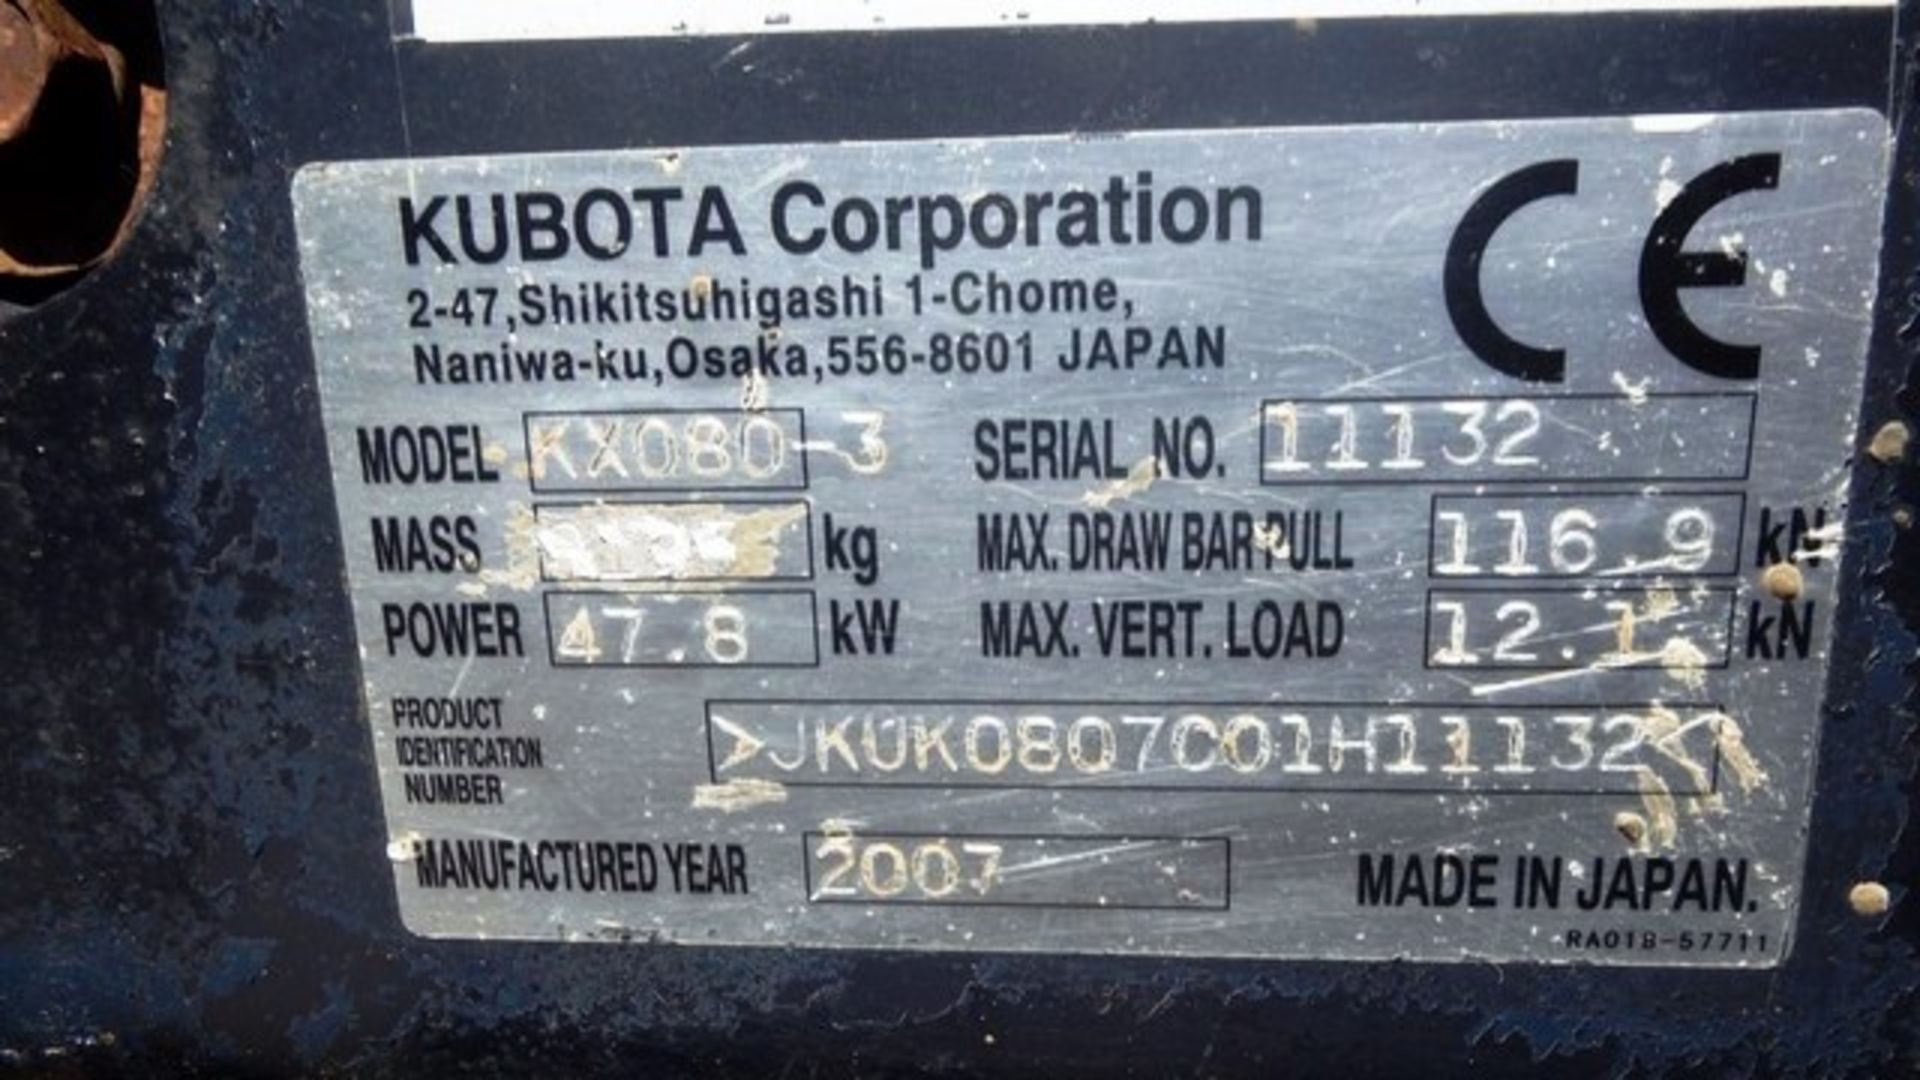 2007 KUBOTA KX0803 8 TON EXCAVATOR, SN 11132, 3 BUCKETS, 4793 HOURS (NOT VERIFIED) - Image 2 of 23